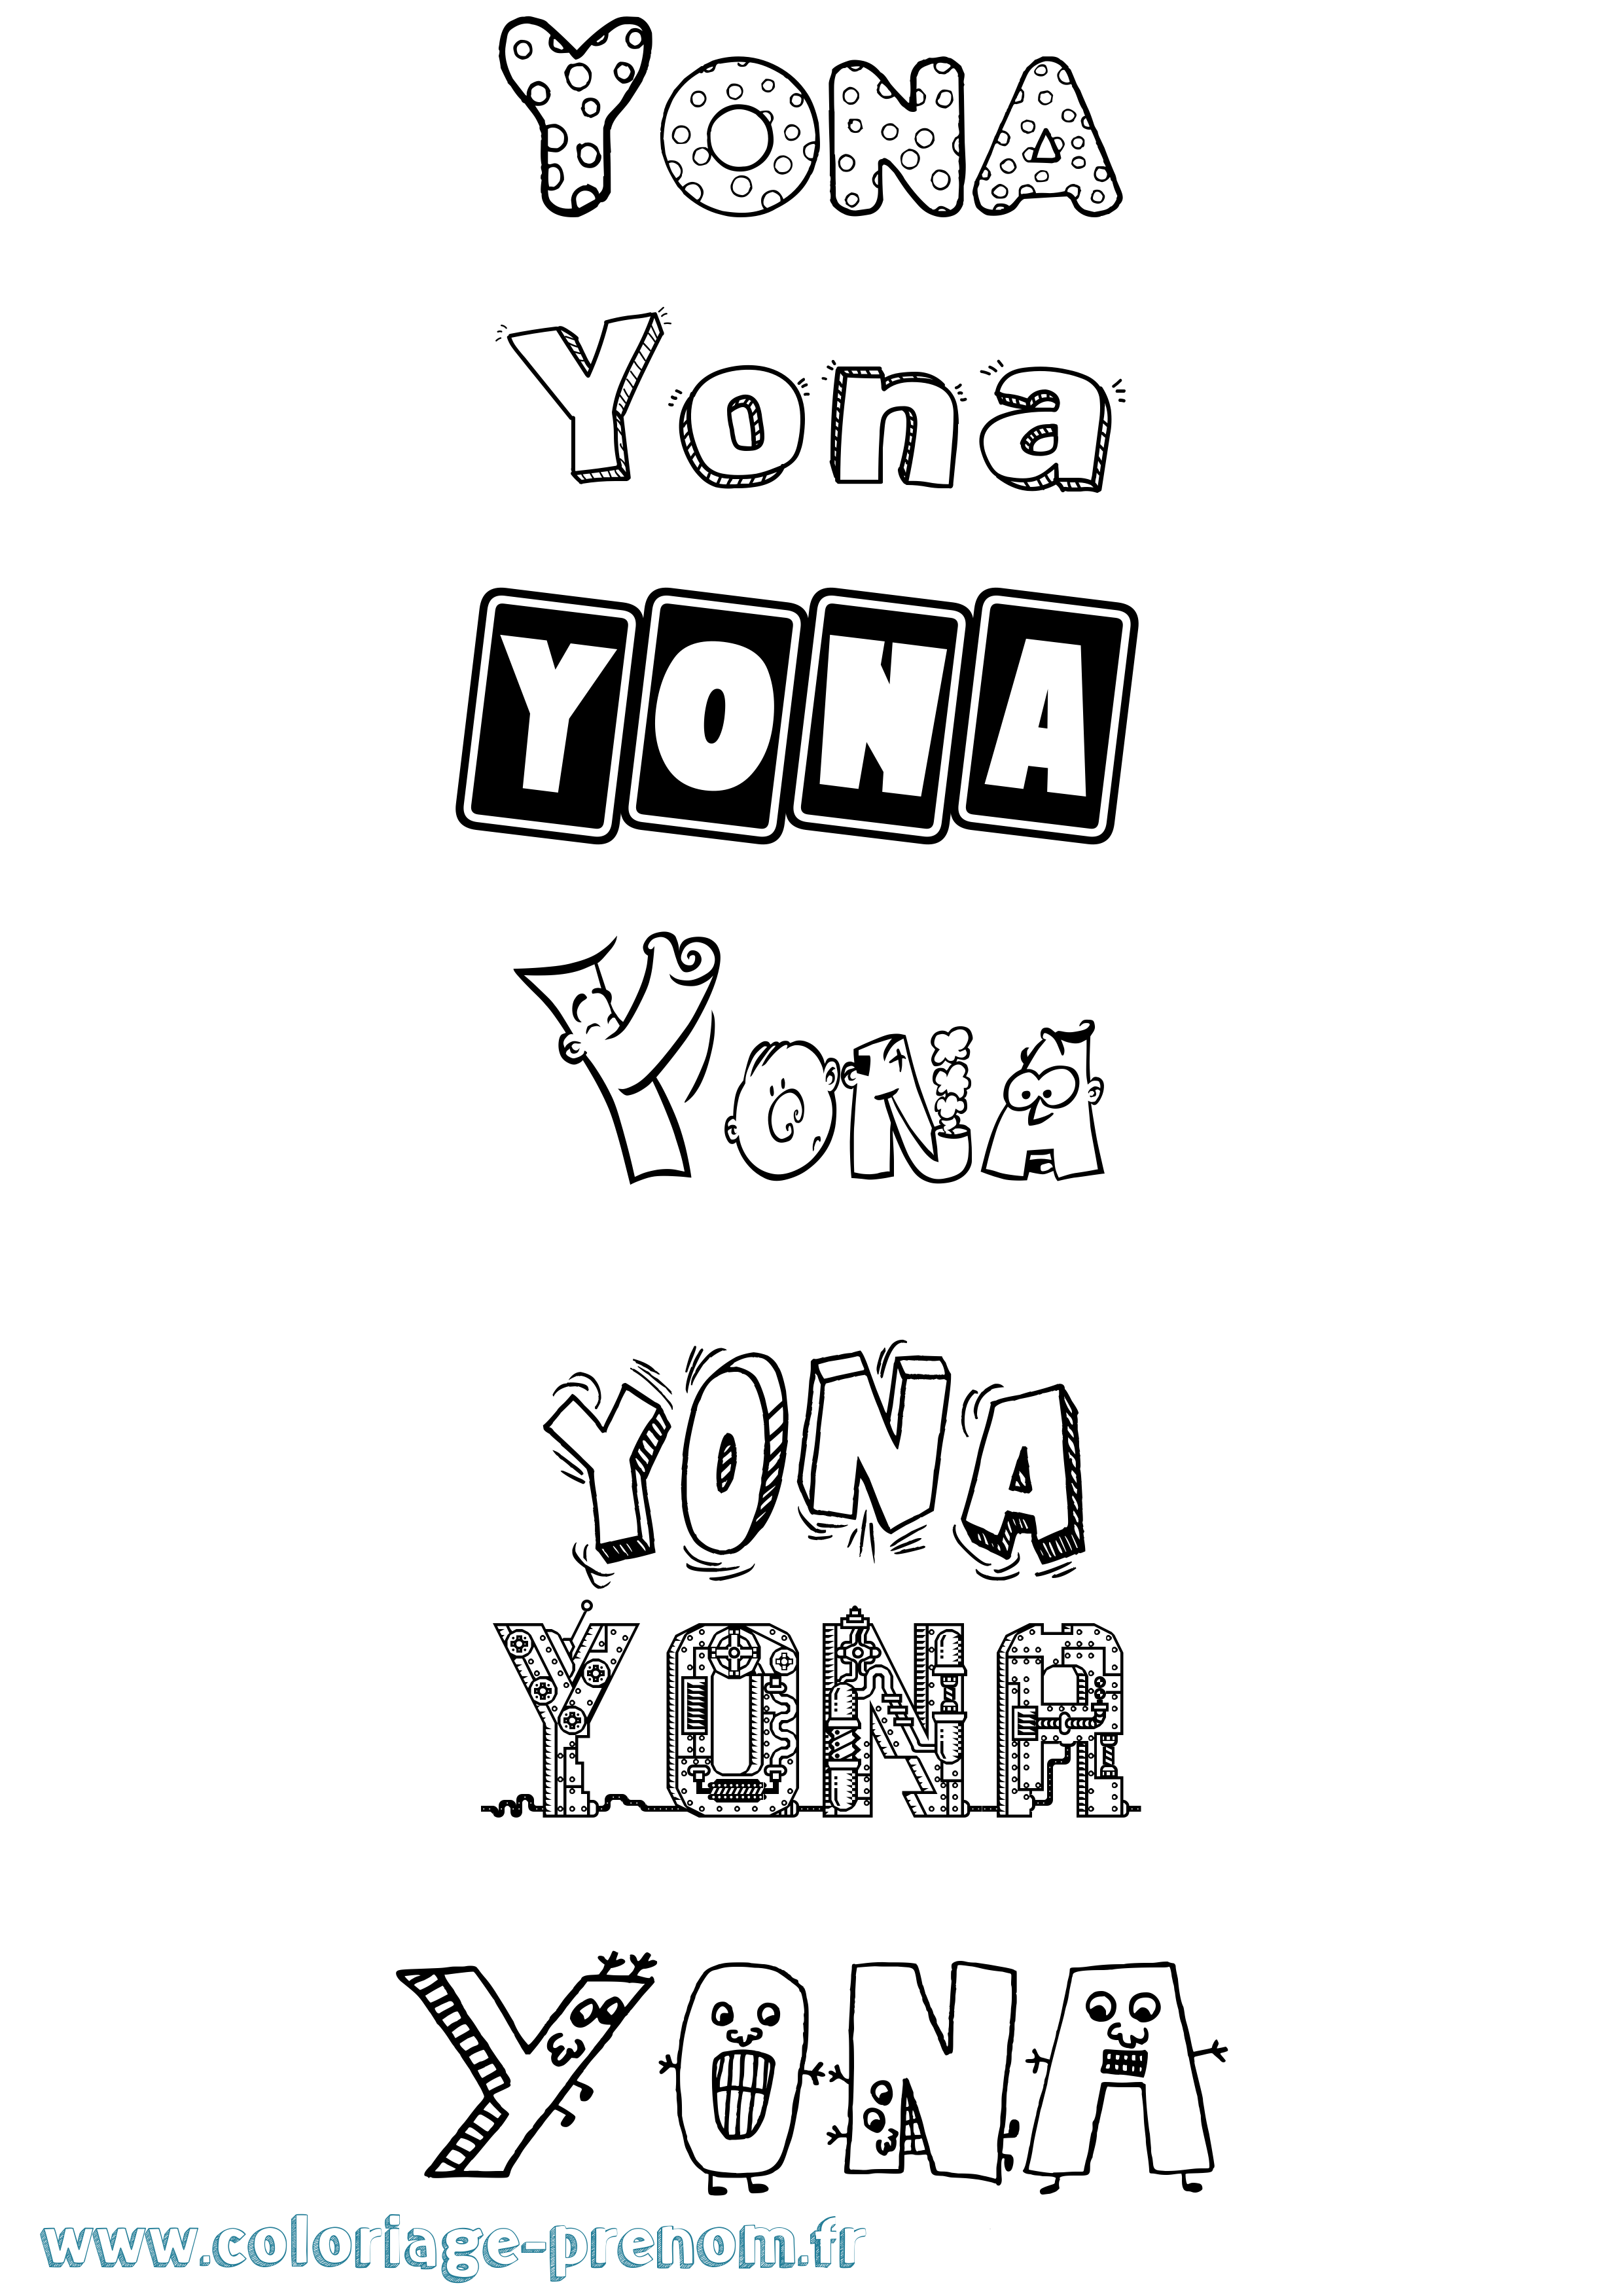 Coloriage prénom Yona Fun